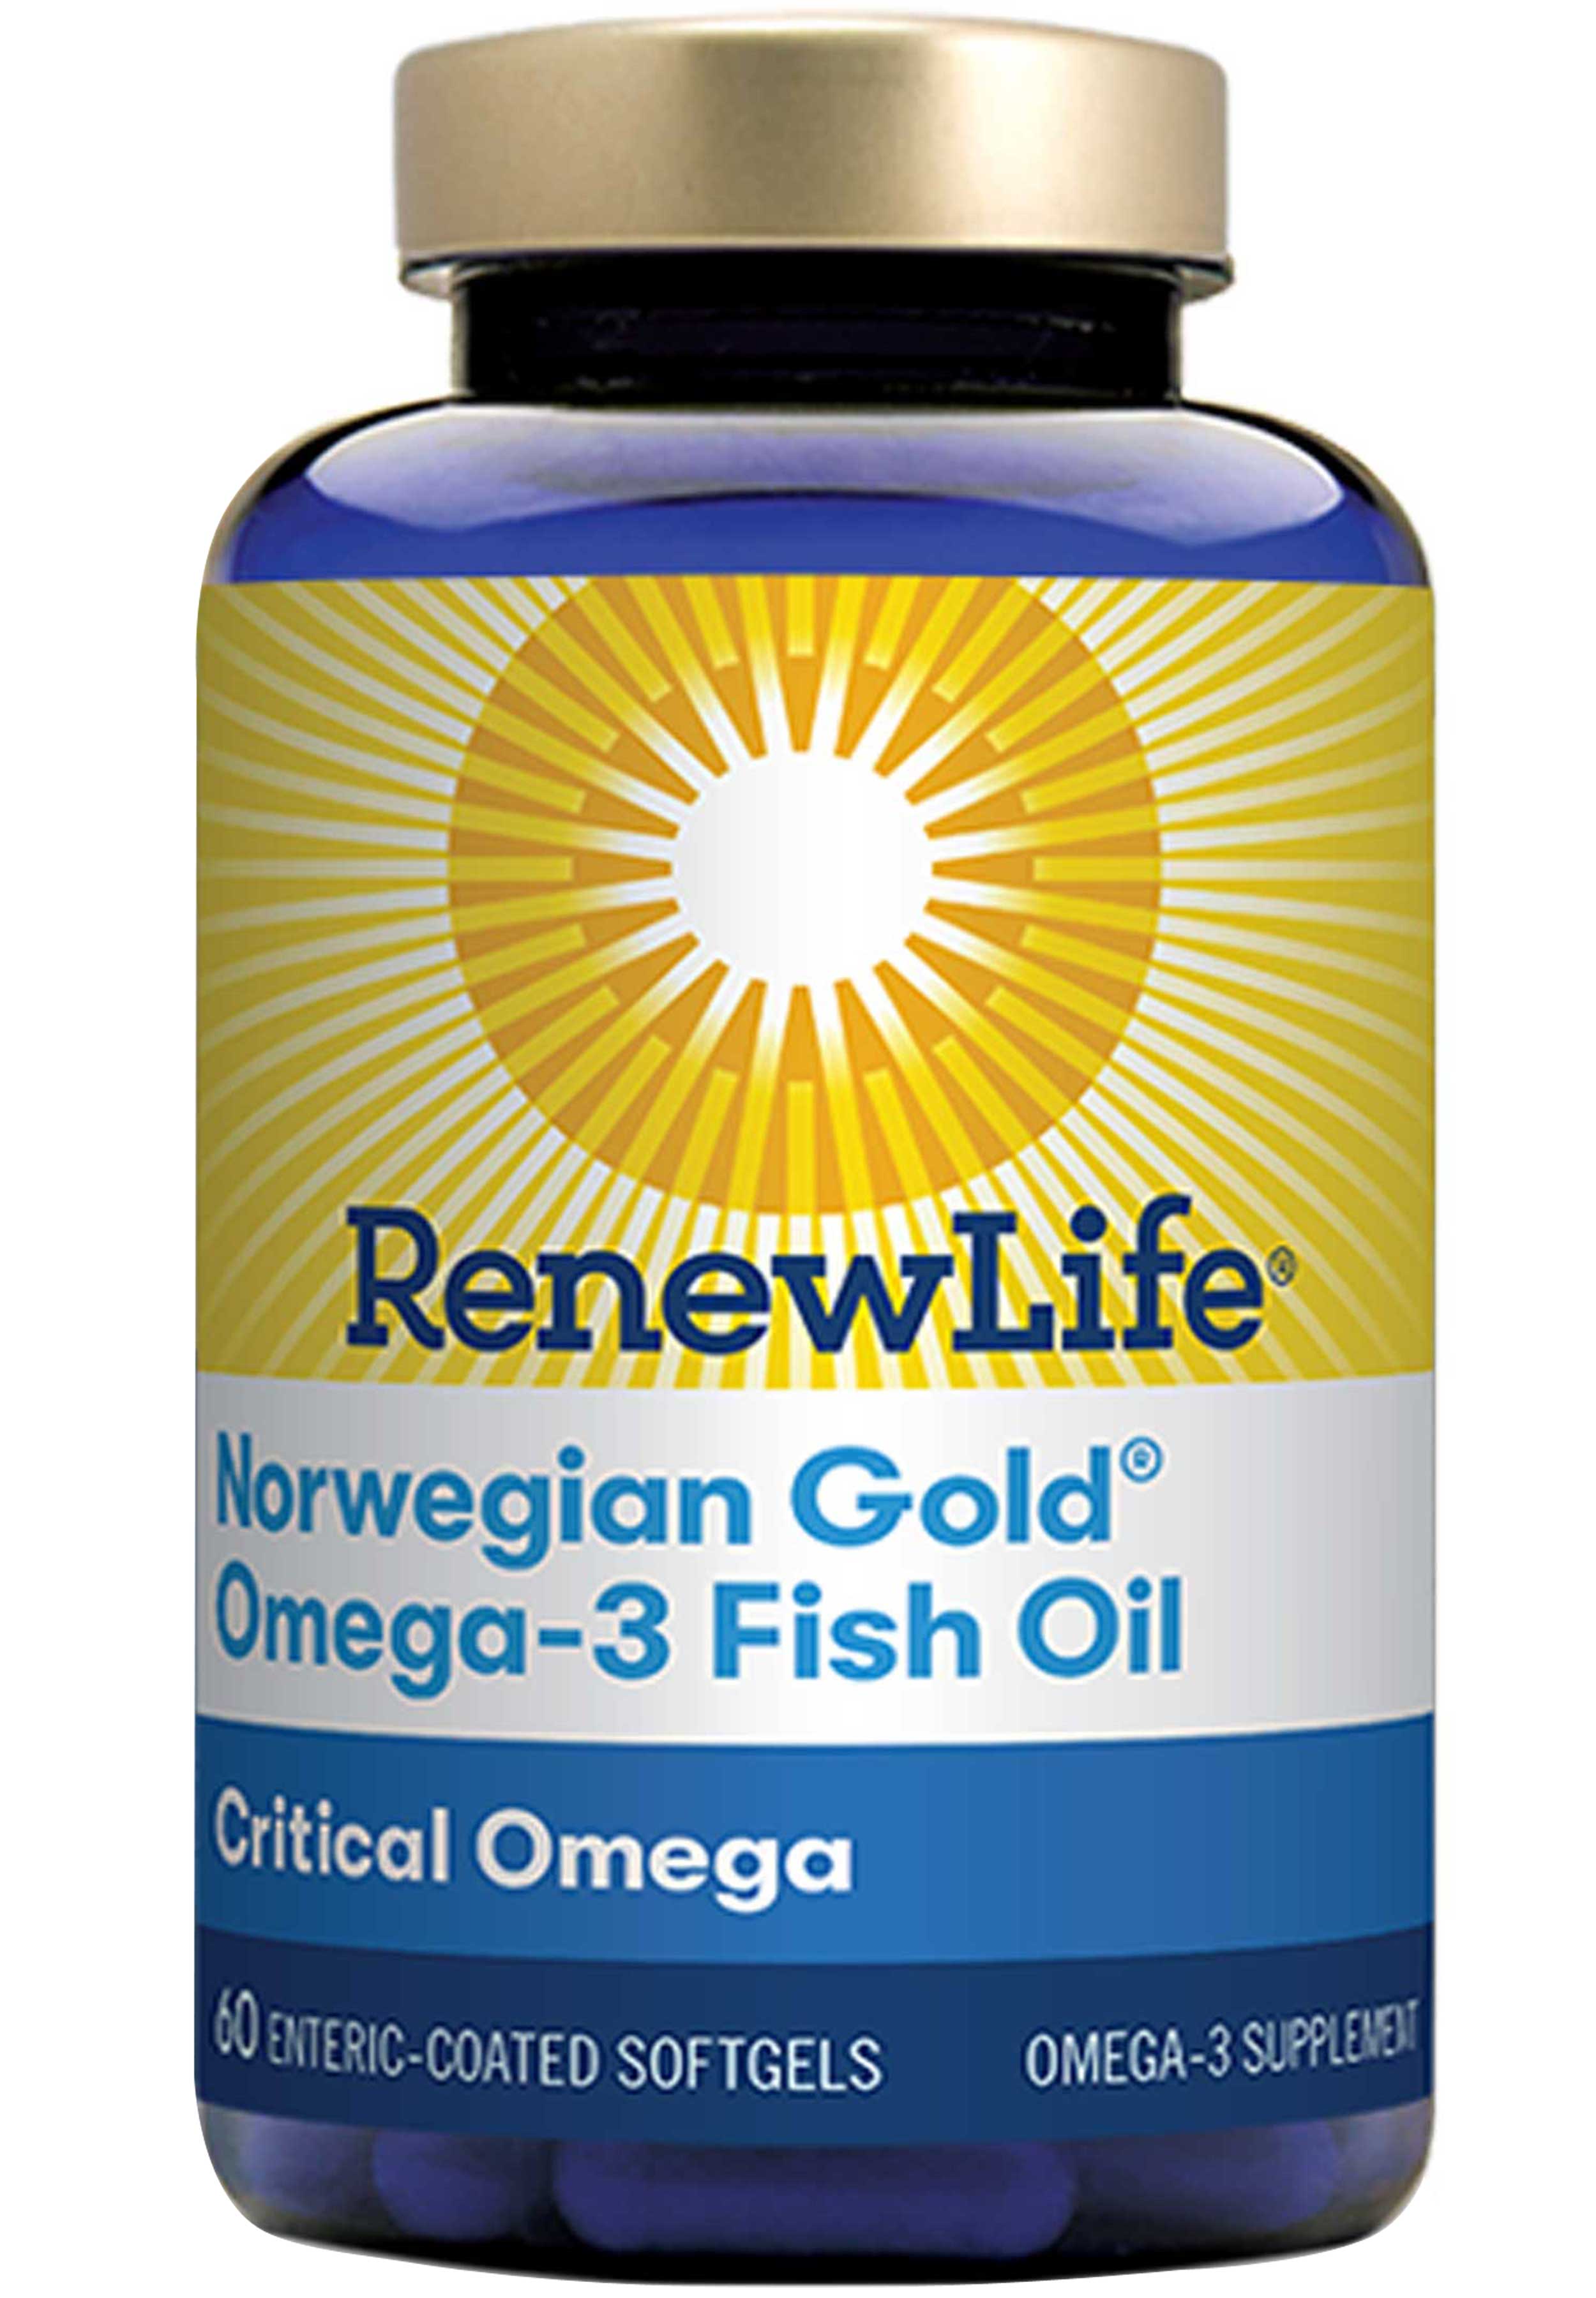 Renew Life Norwegian Gold Omega-3 Fish Oil Critical Omega